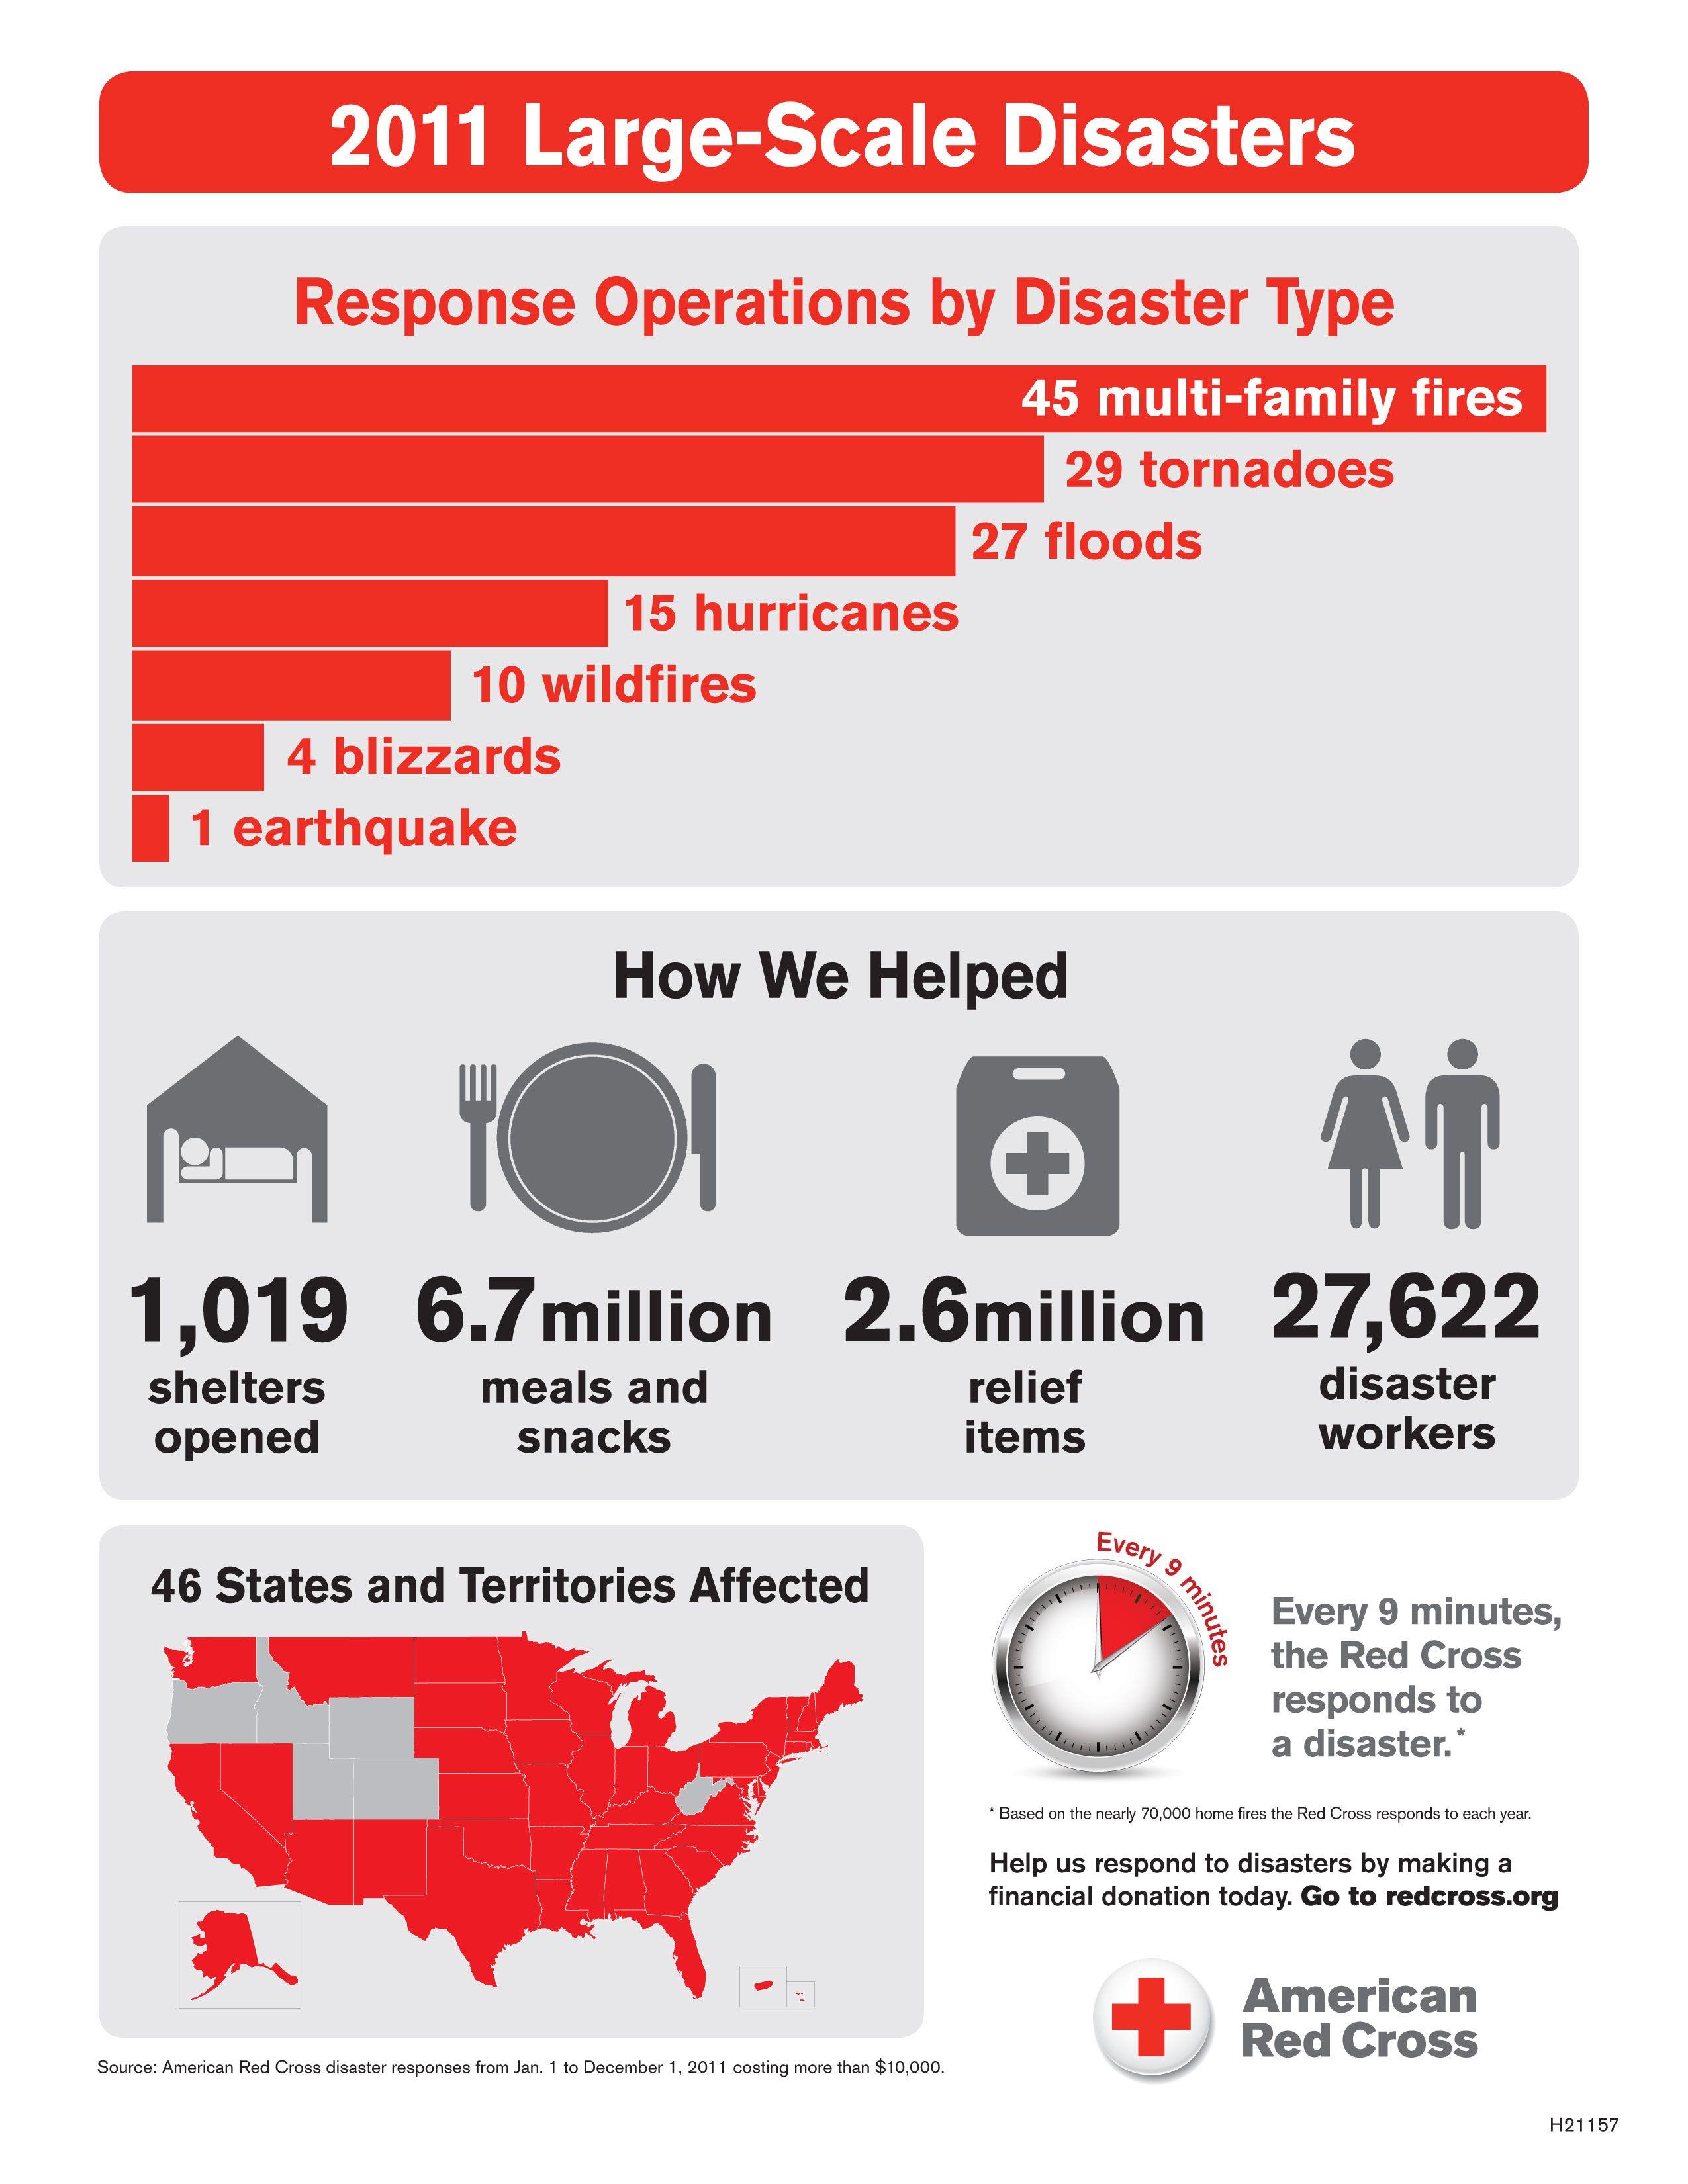 Big Picture of American Red Cross Logo - Hurricane Irene | American Red Cross Wisconsin Region